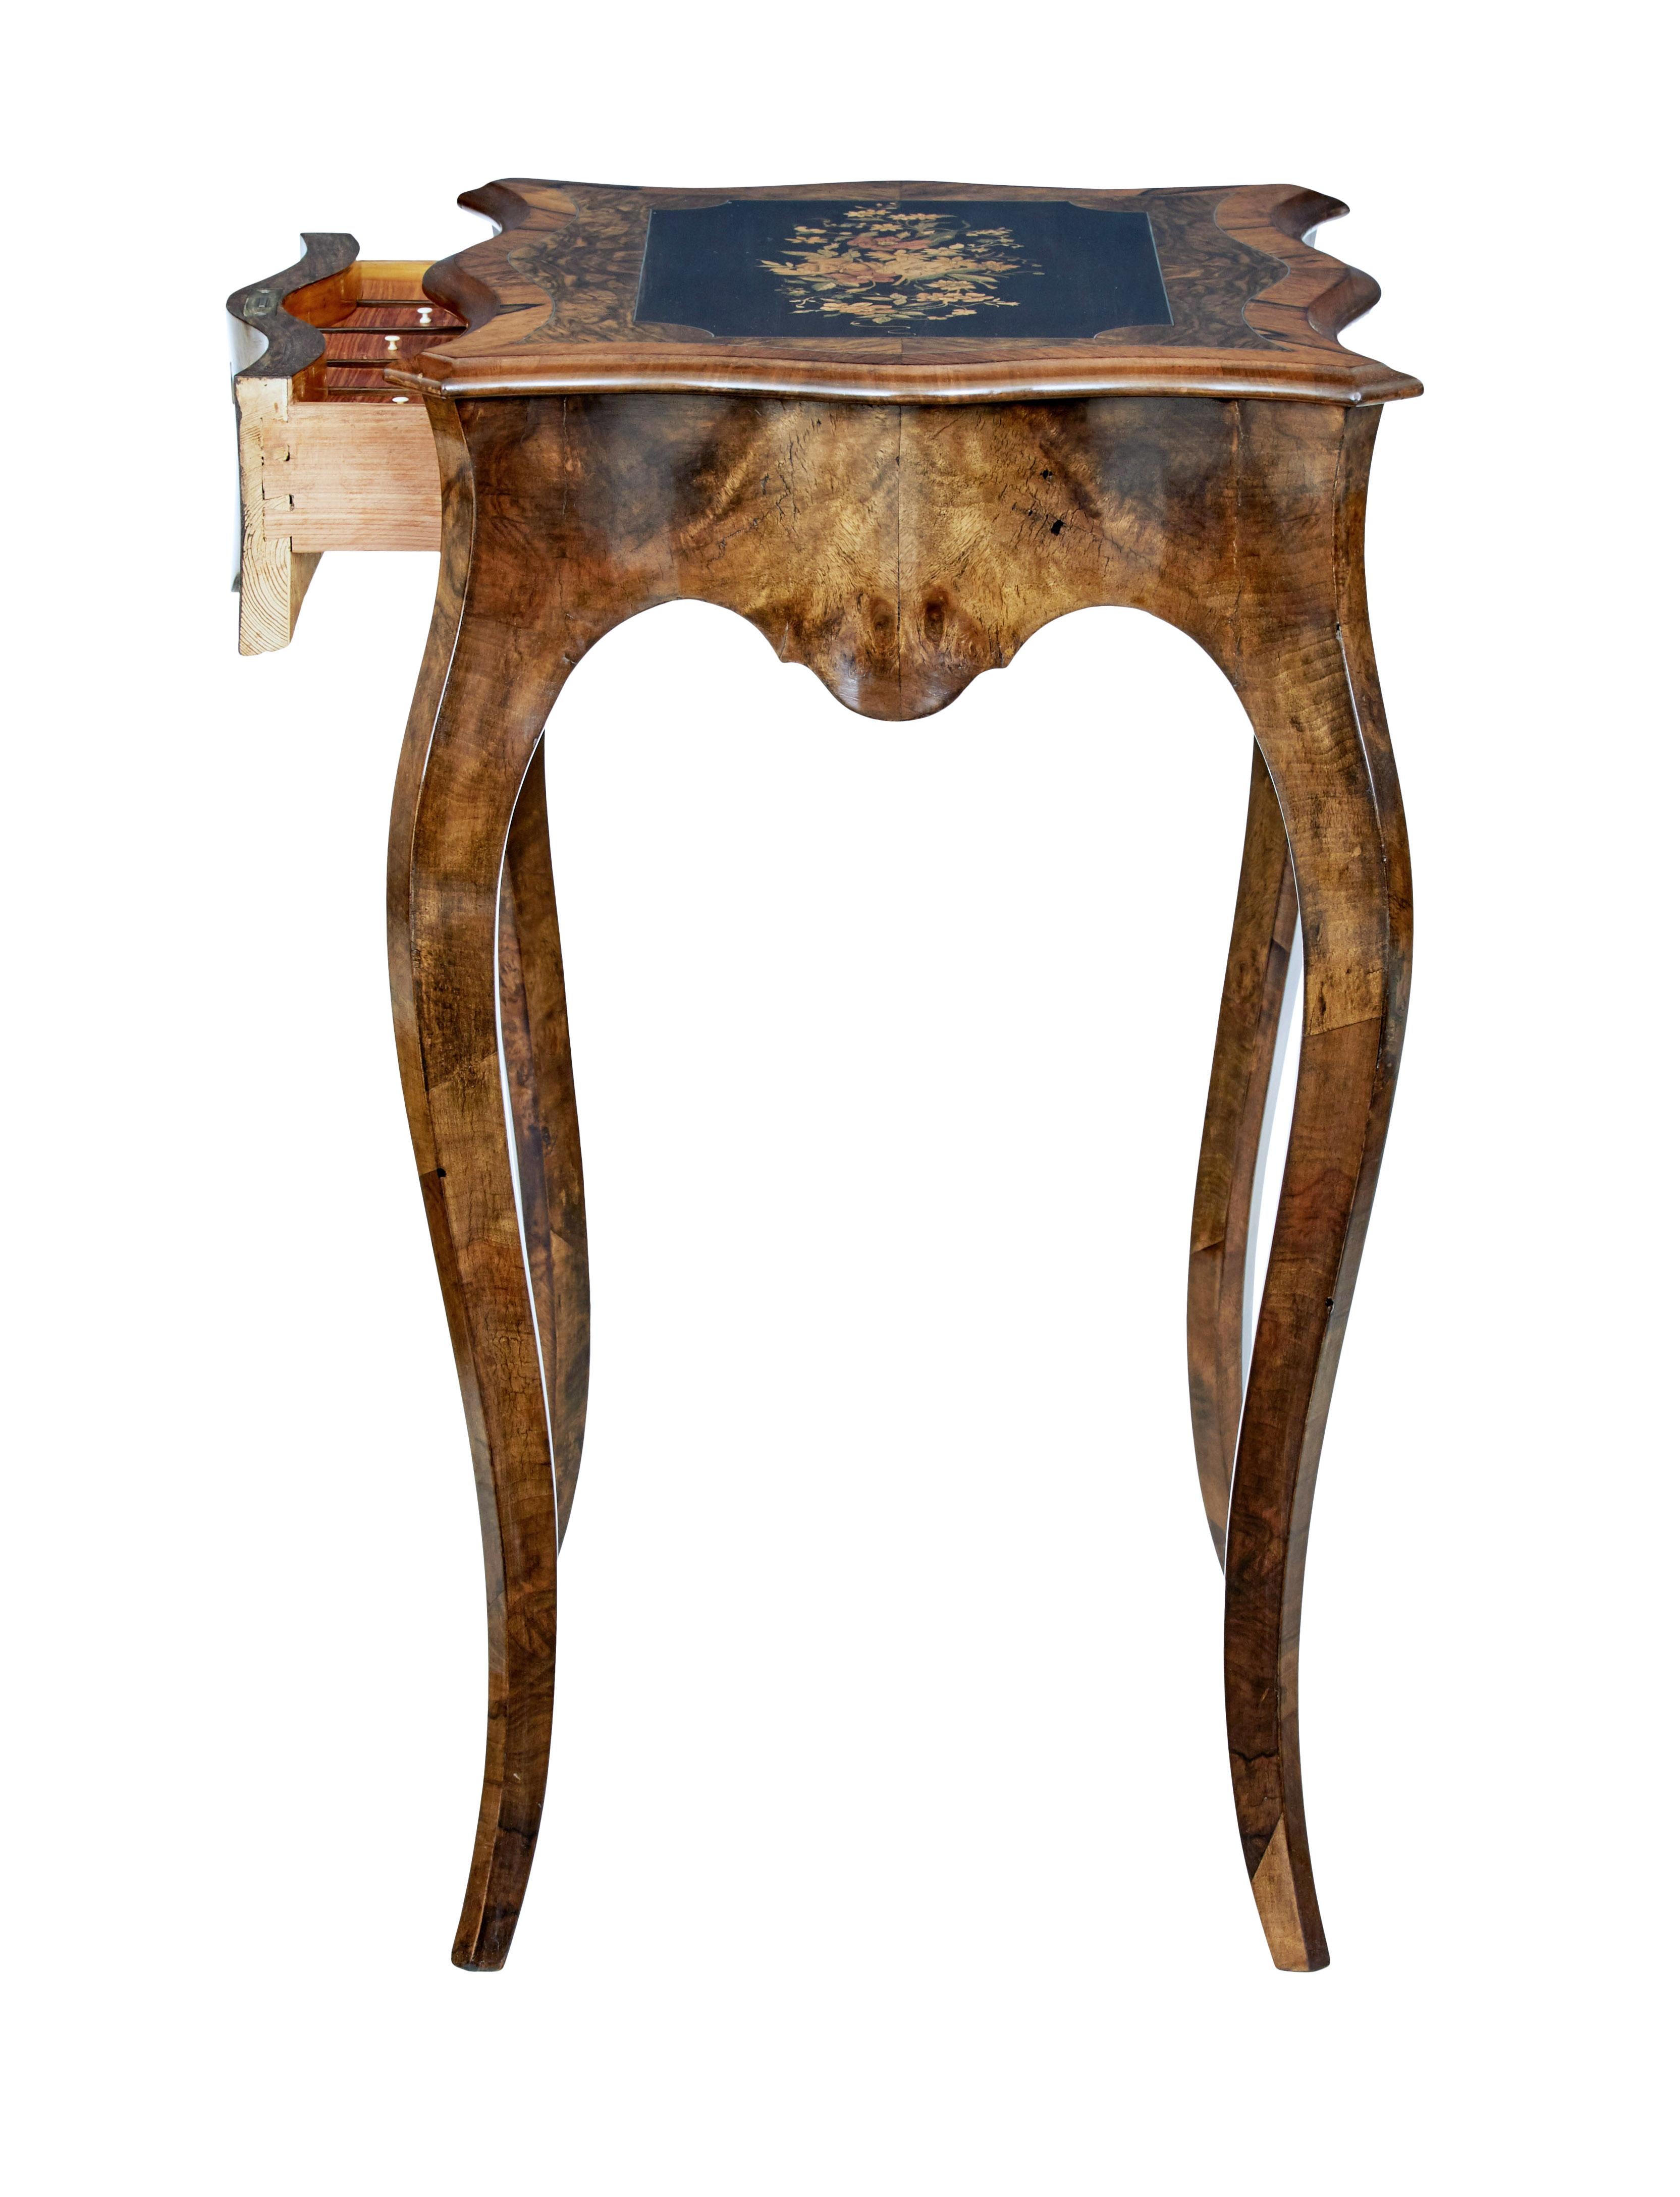 Inlay 19th Century Walnut and Inlaid Work Table